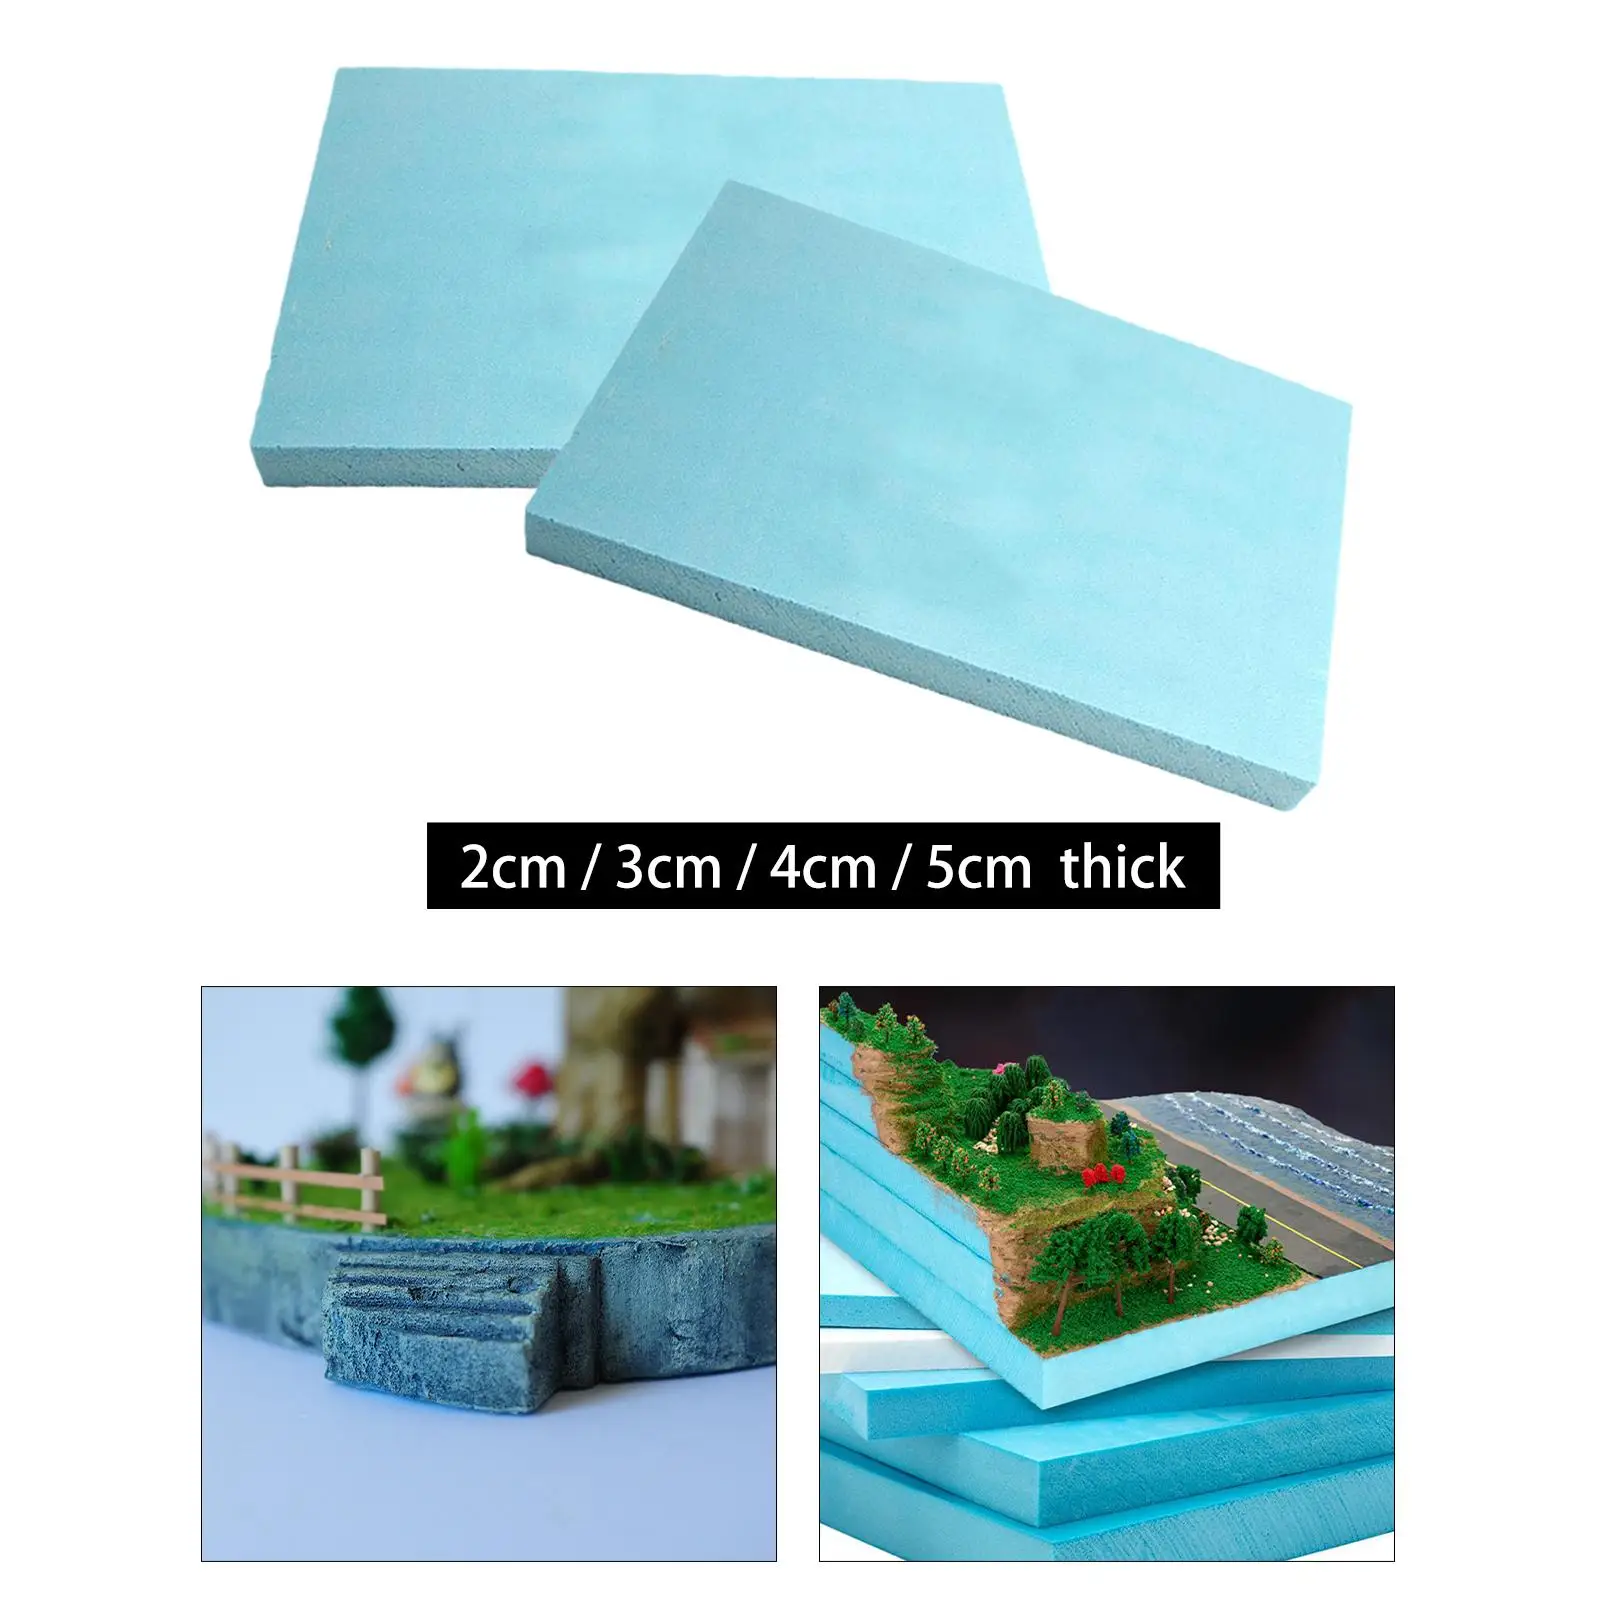 2x Craft Board Foam DIY Landscape Scenery Building Modelling Foam Plate Foam Slab Diorama Base for Hobby Arts Crafts Scenic